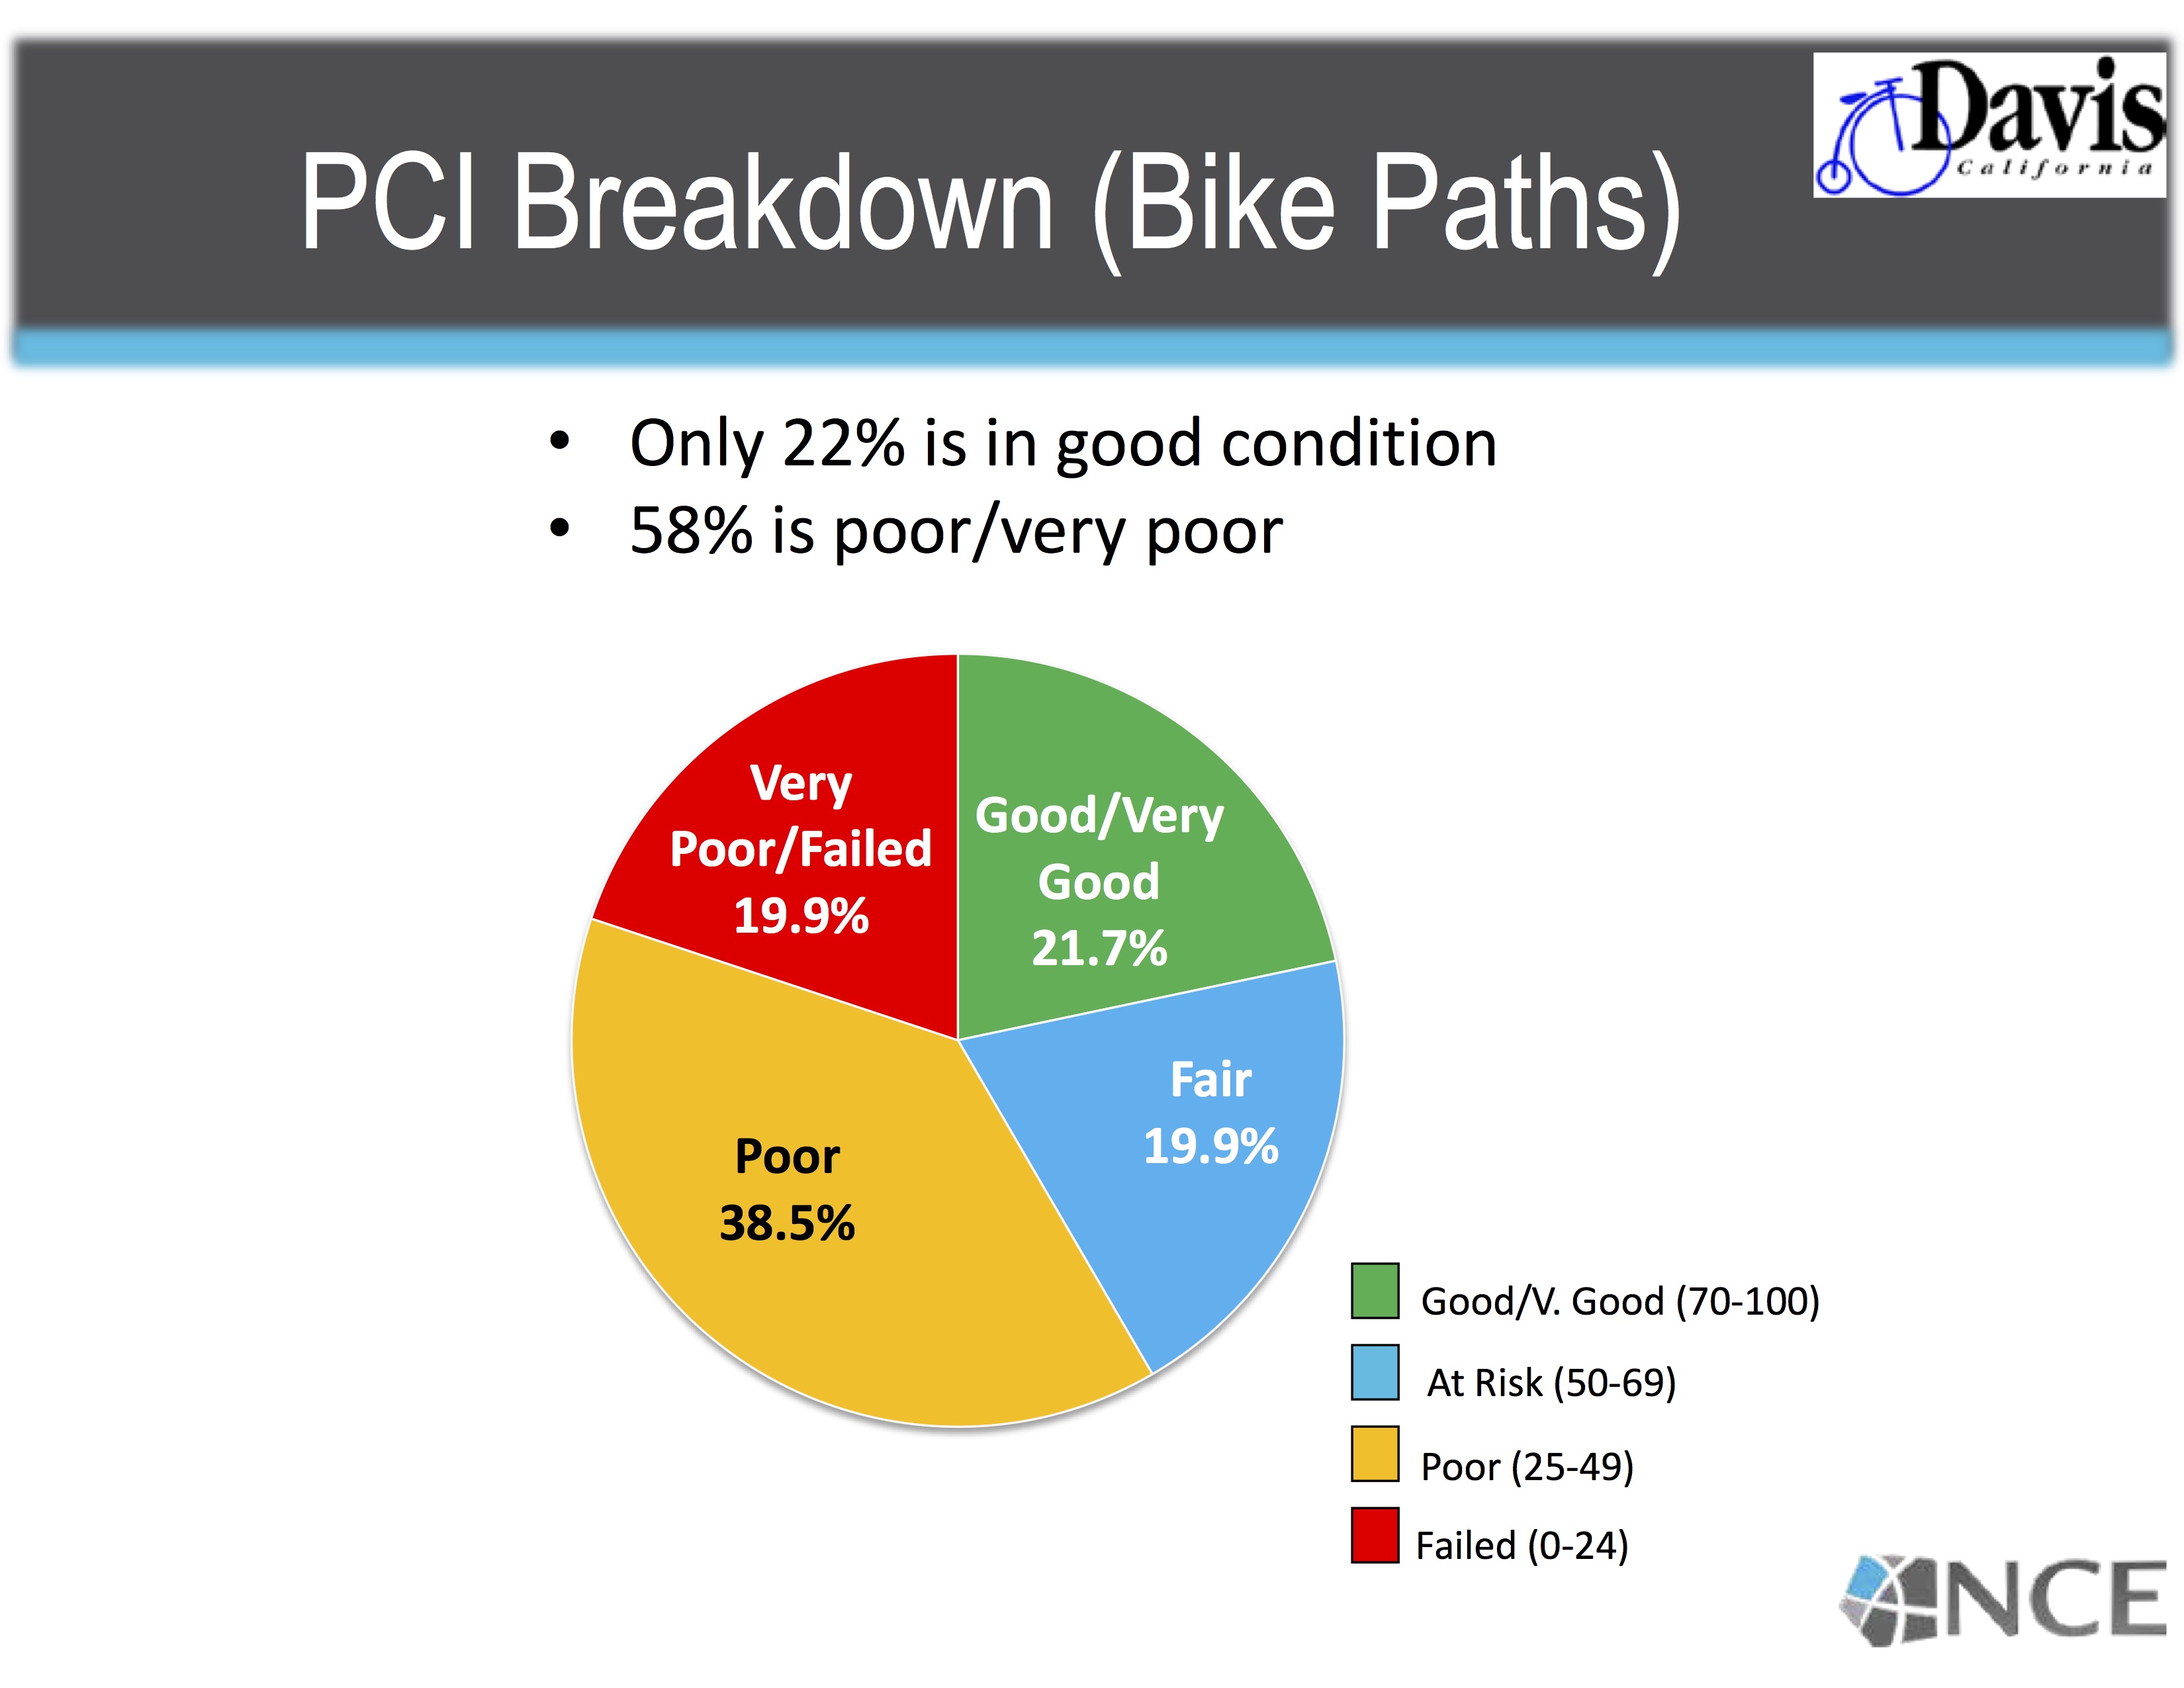 https://www.davisvanguard.org/wp-content/uploads/2016/07/08-Pavement-Management-PCI-for-Bike-Paths.jpg